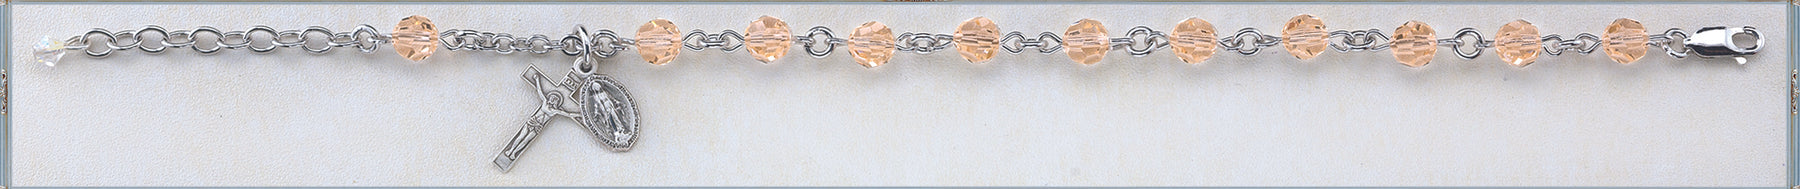 Smoked Round Faceted Swarovski Crystal Sterling Bracelet